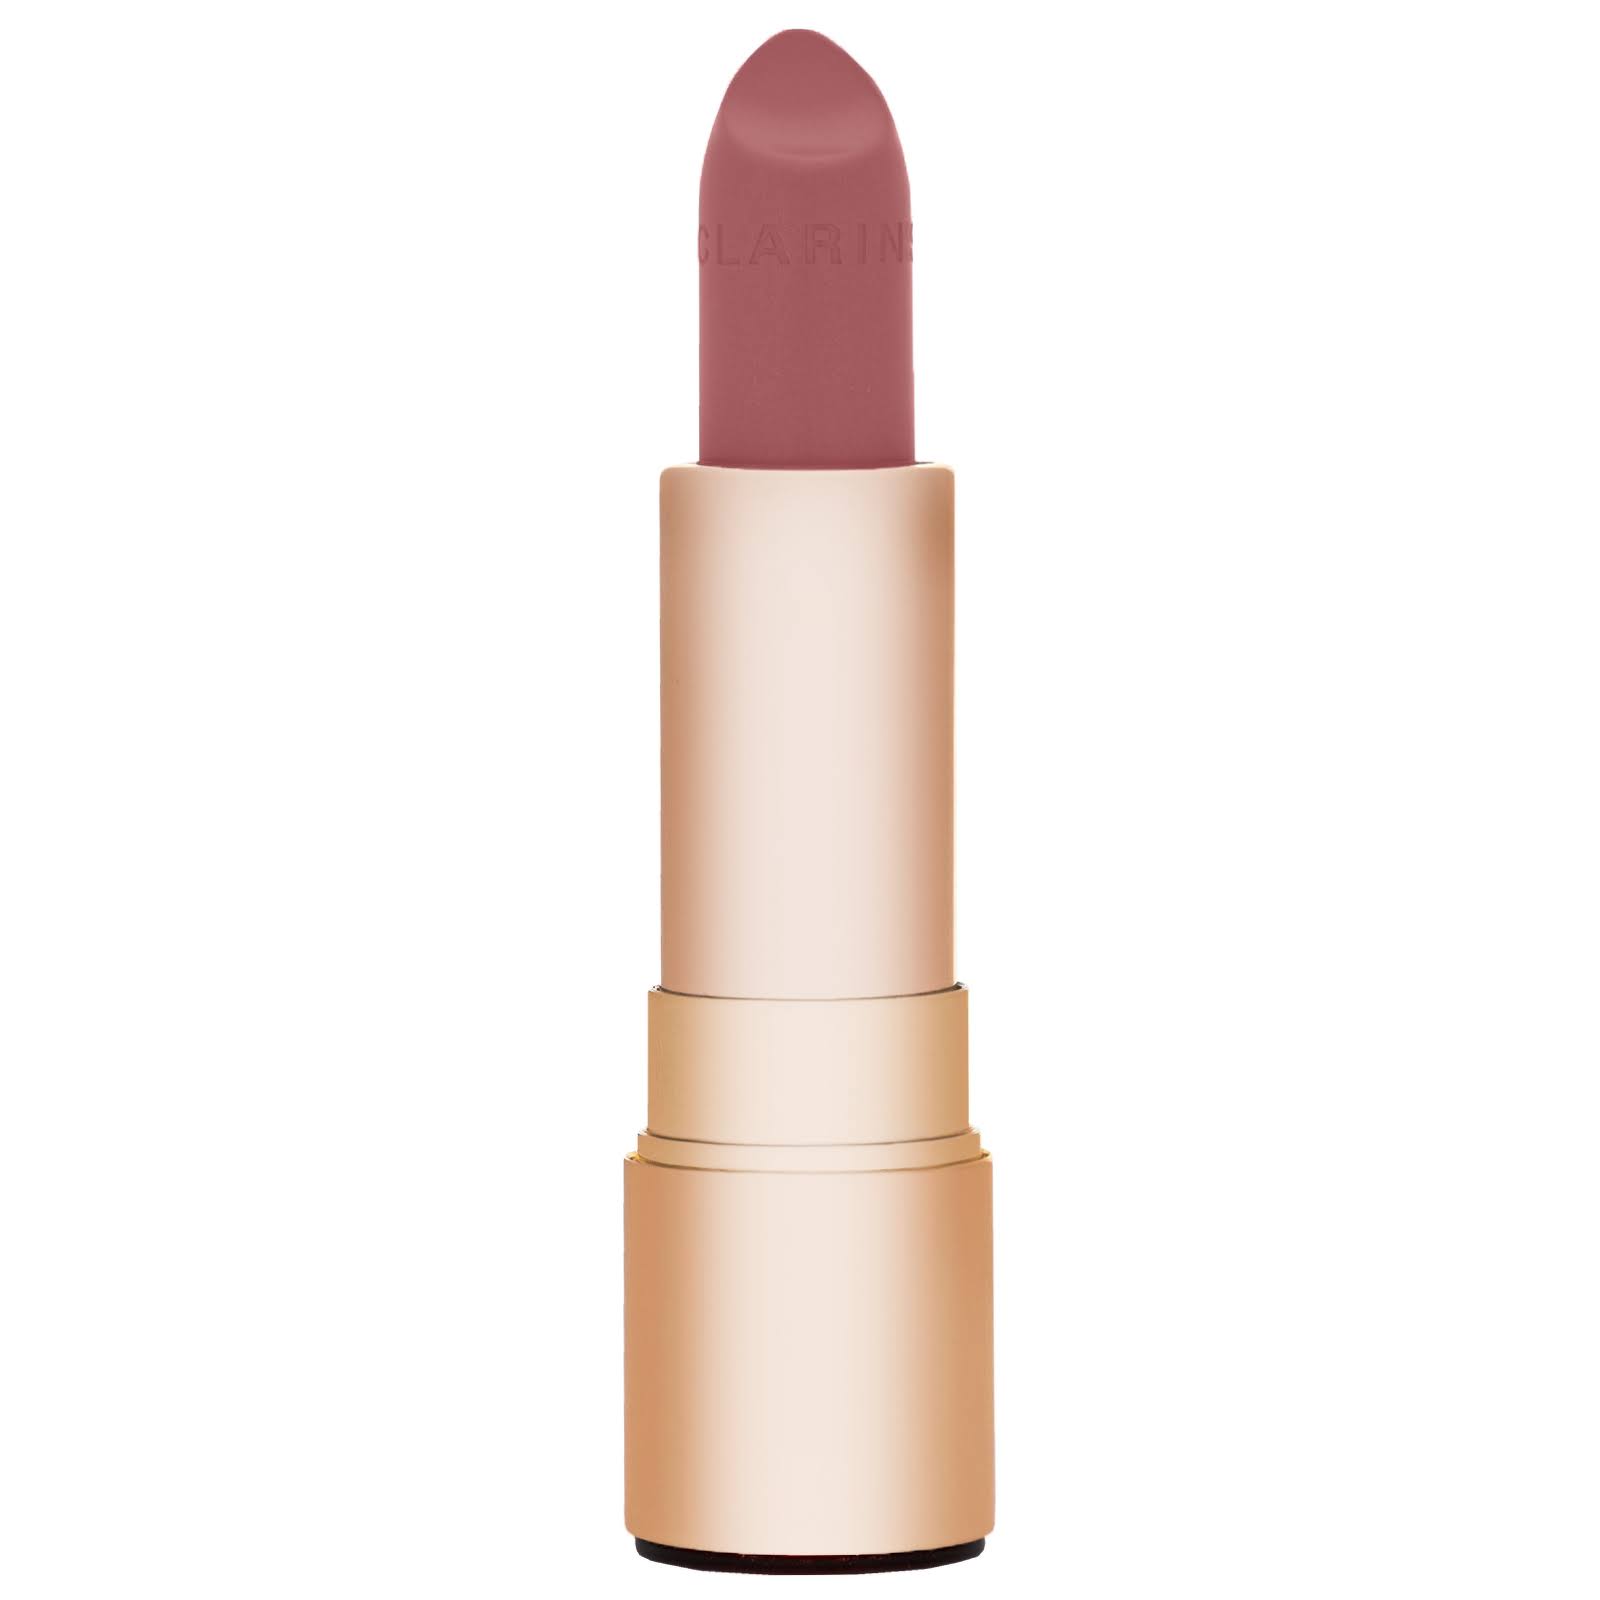 Clarins Joli Rouge Lipstick - Soft Berry, 3.5g